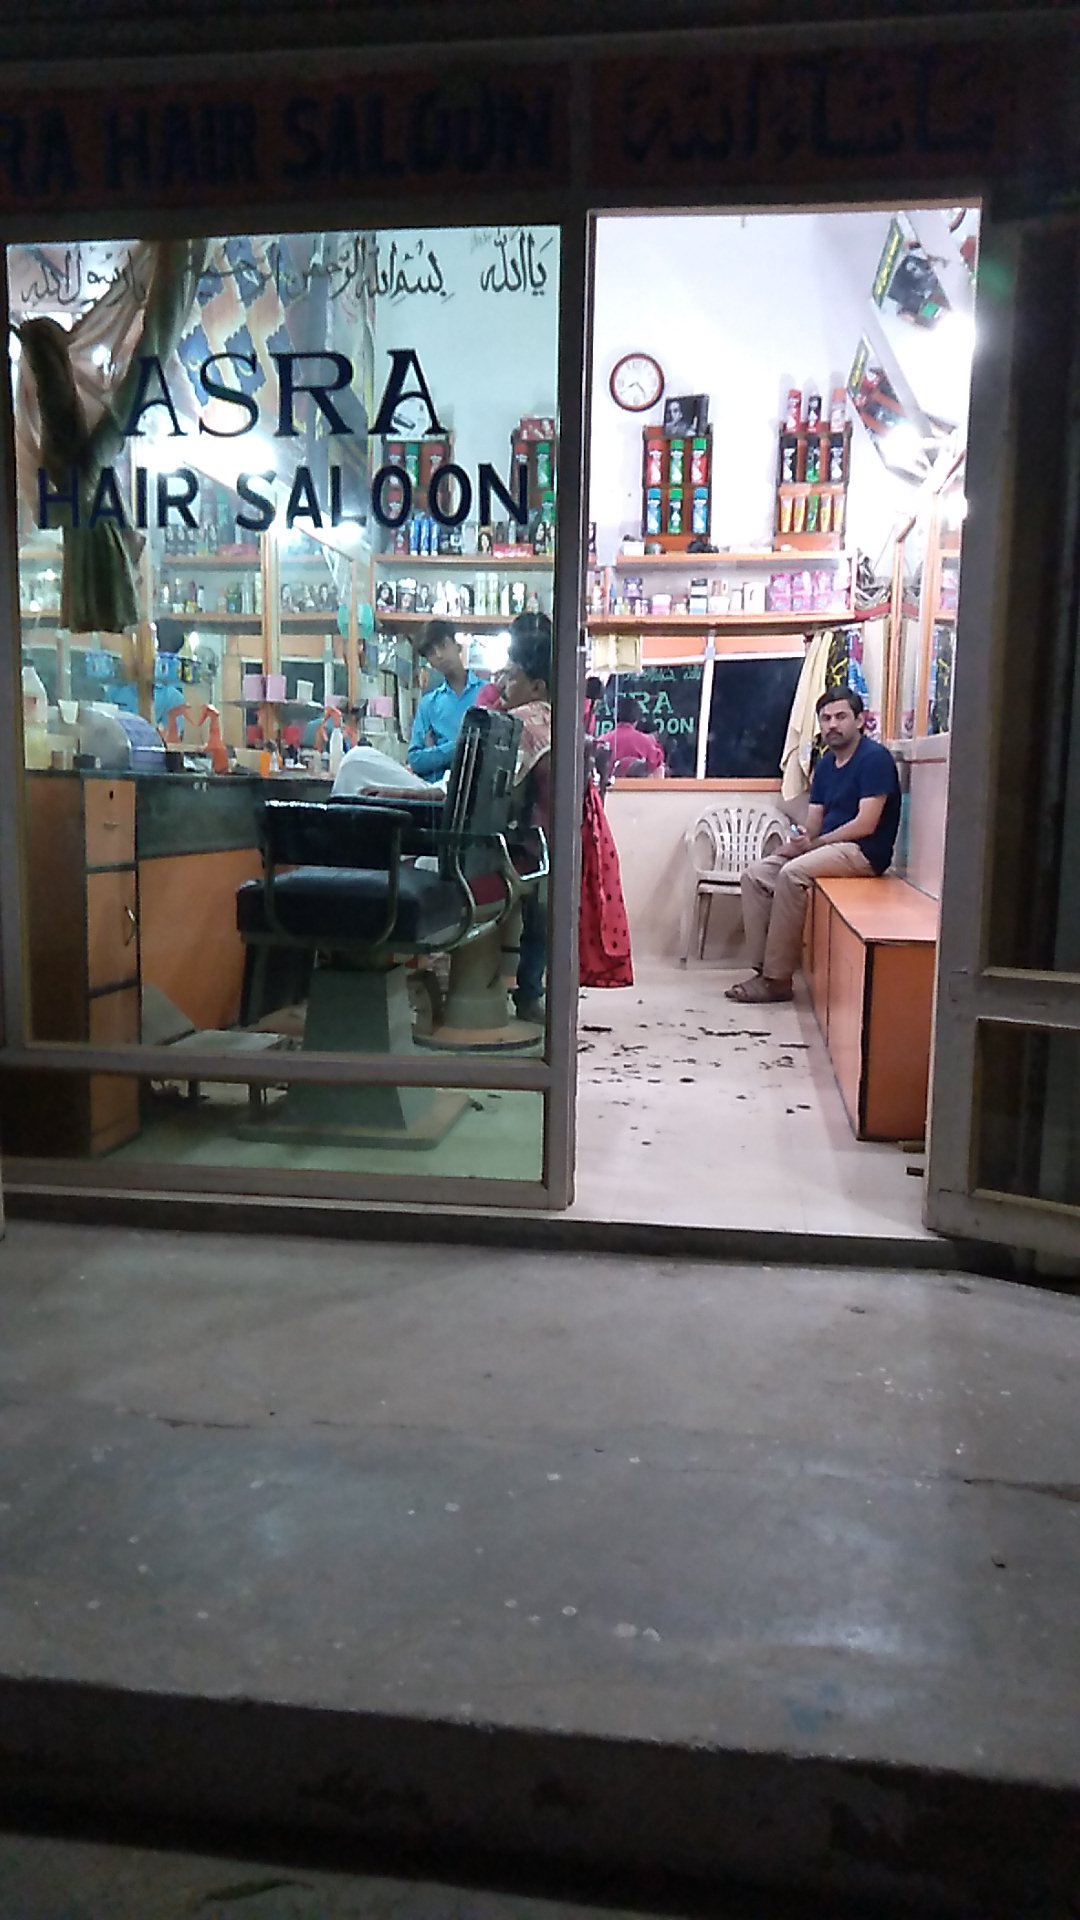 Asra Hair salon